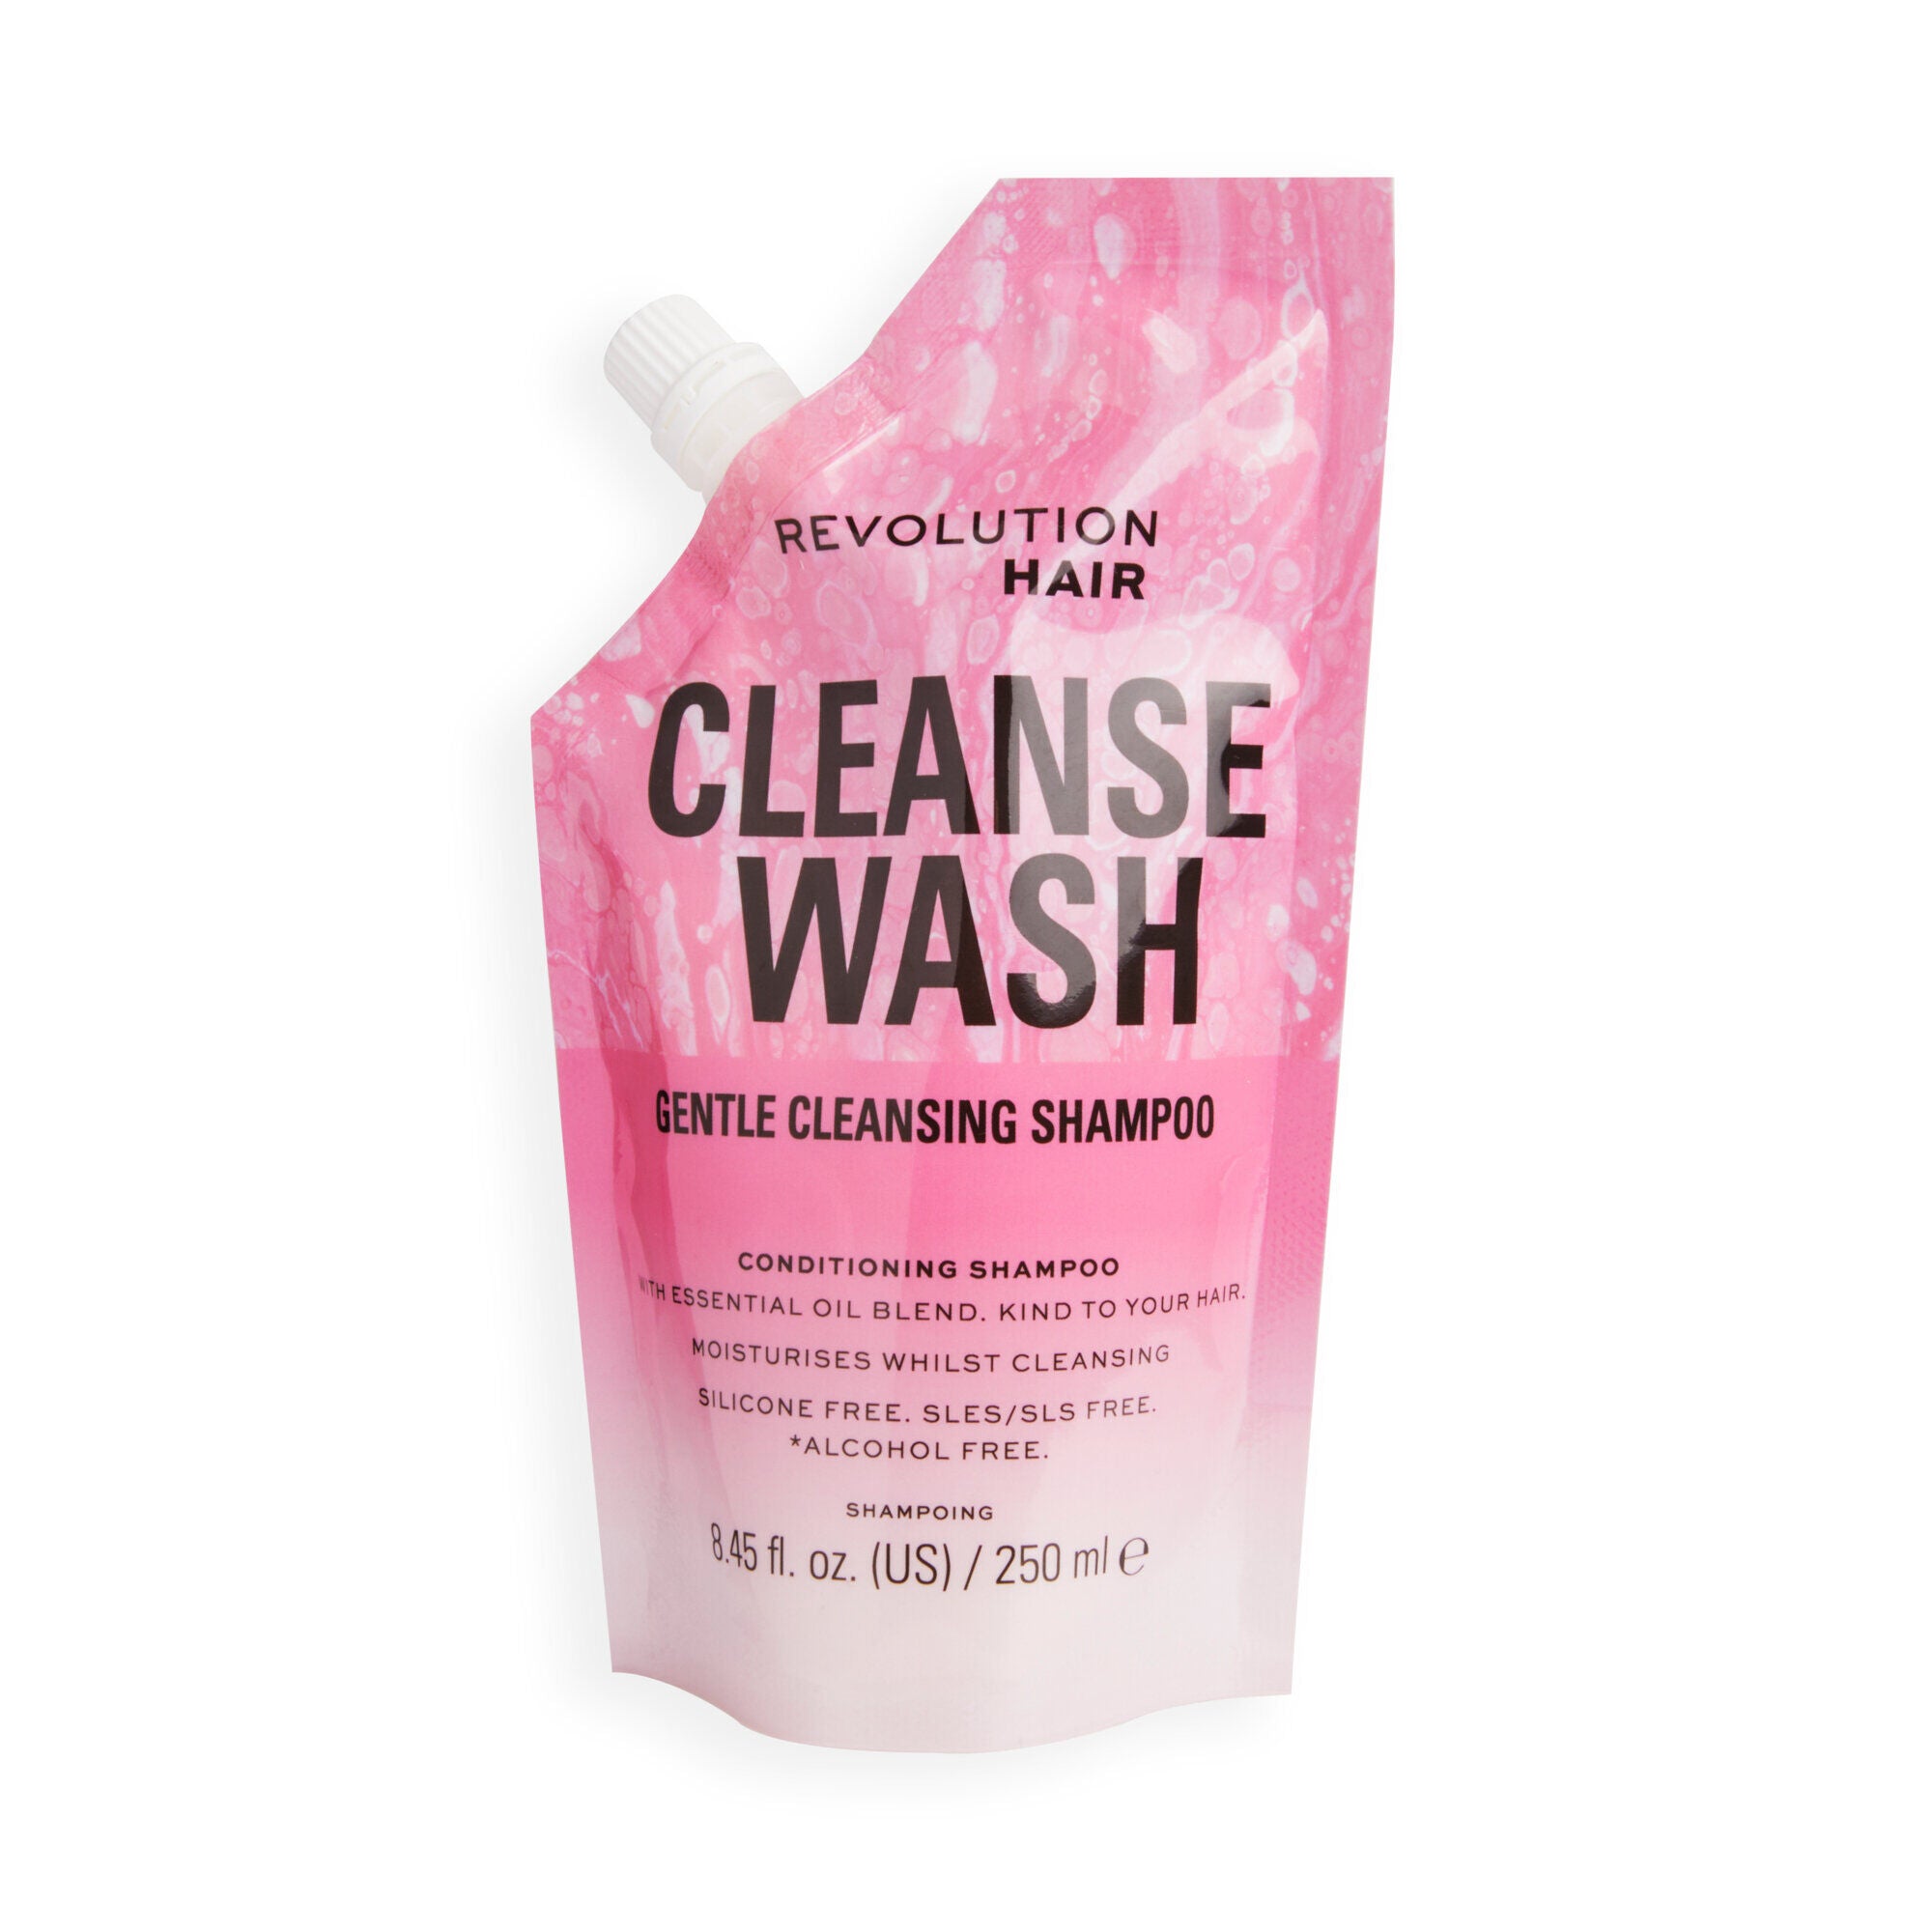 Revolution Cleanse Wash Shampoo